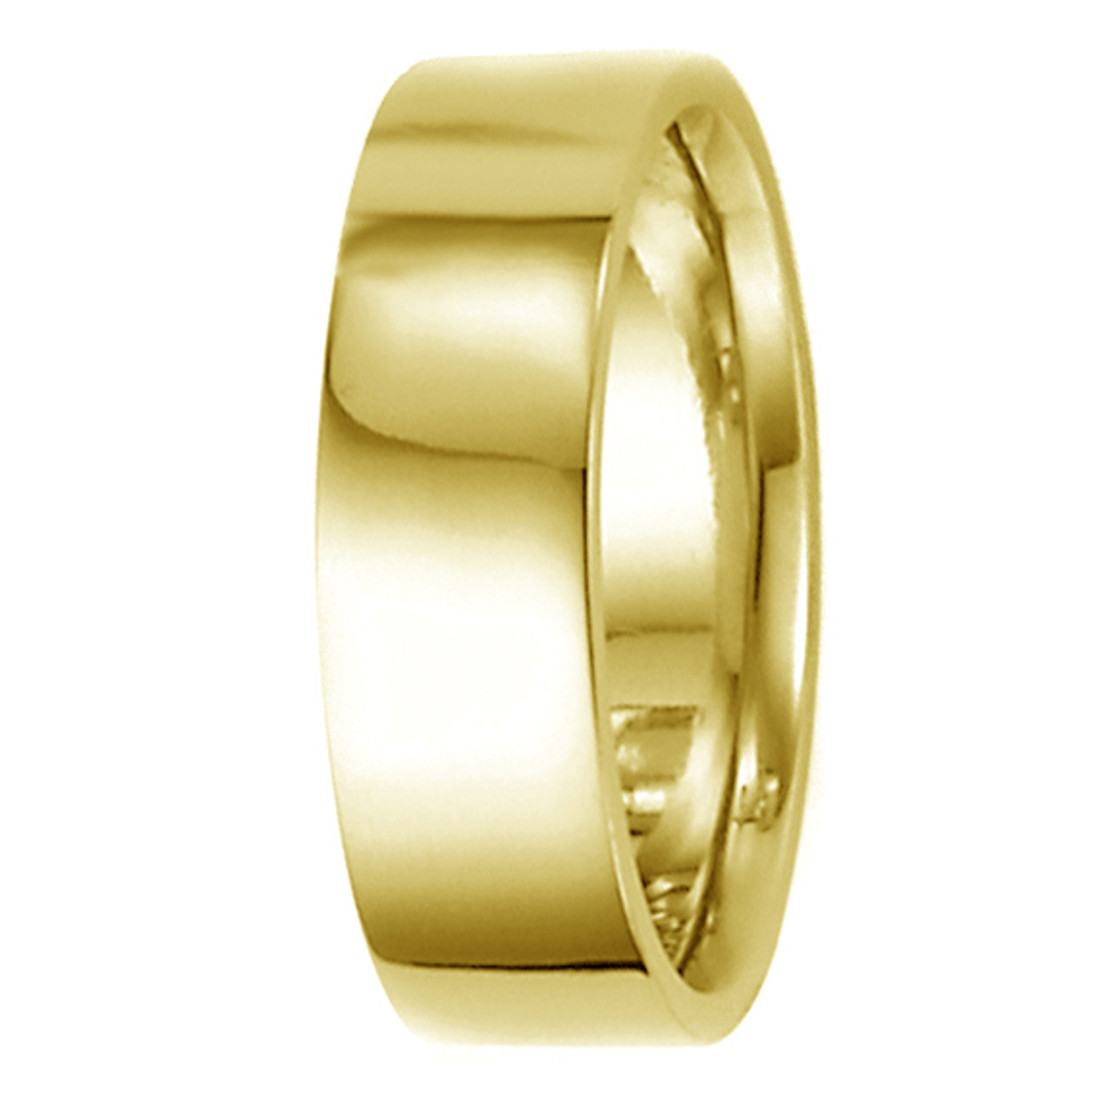 Polished Flat 18k Yellow Gold Wedding Band Men's Ring